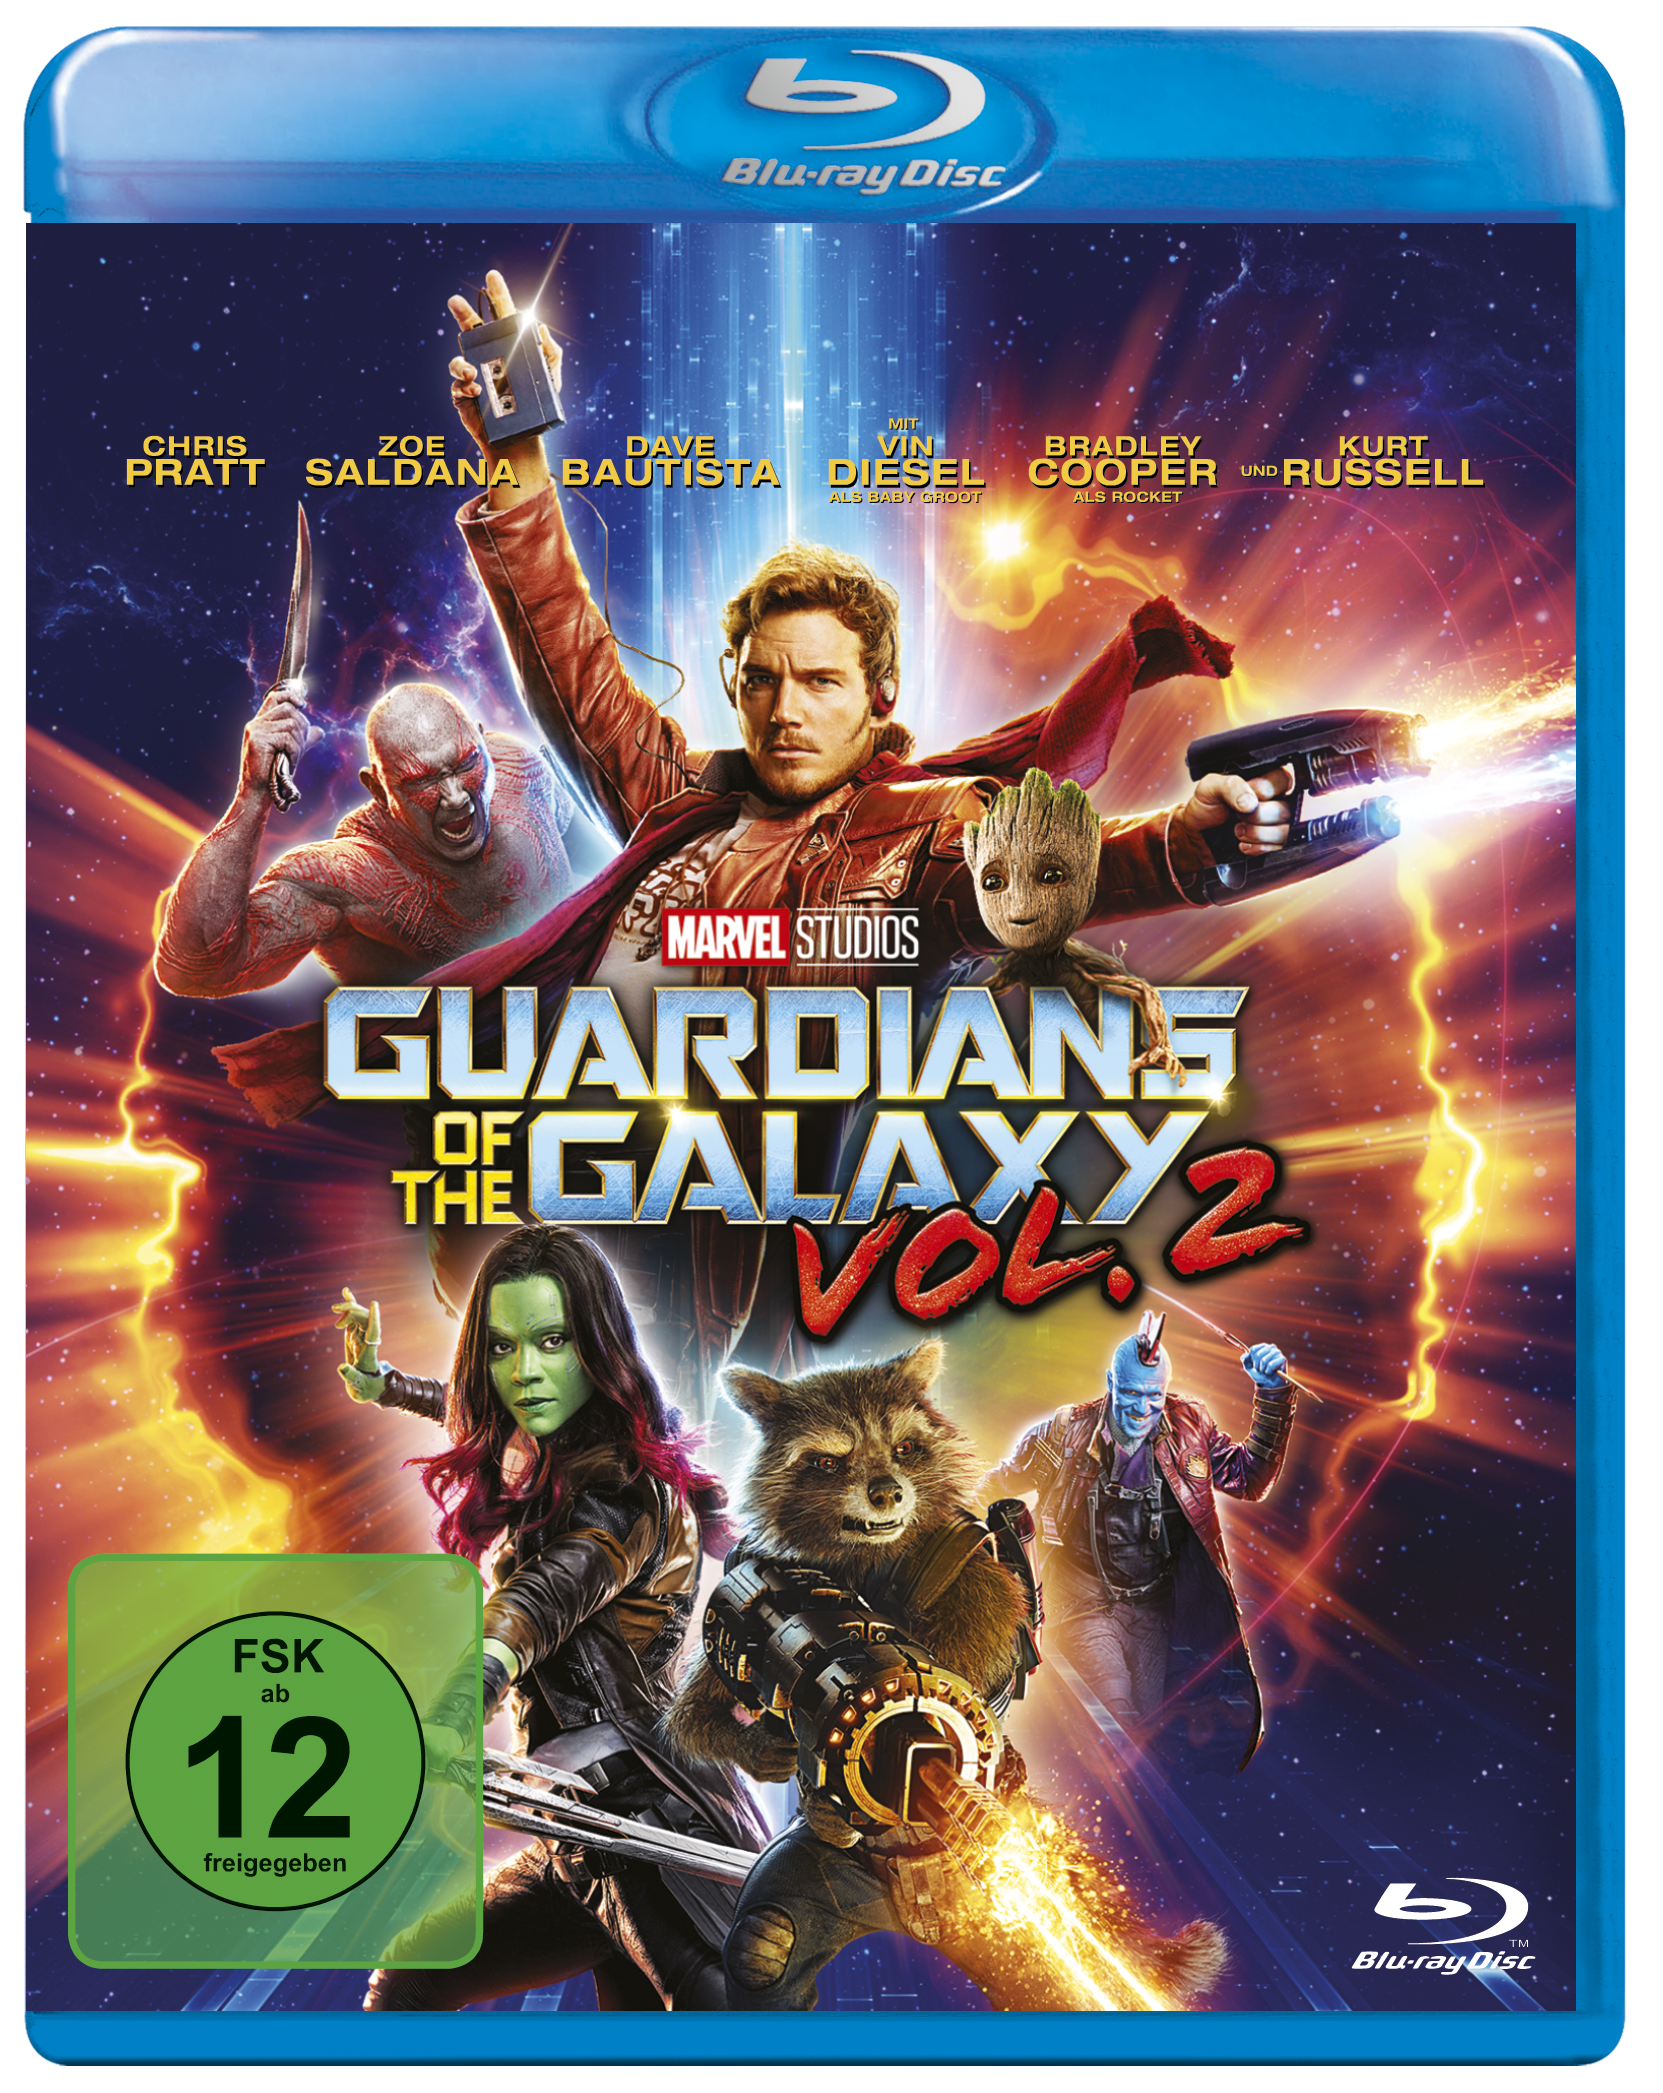 Guardians the Galaxy Vol. 2 Blu-ray of